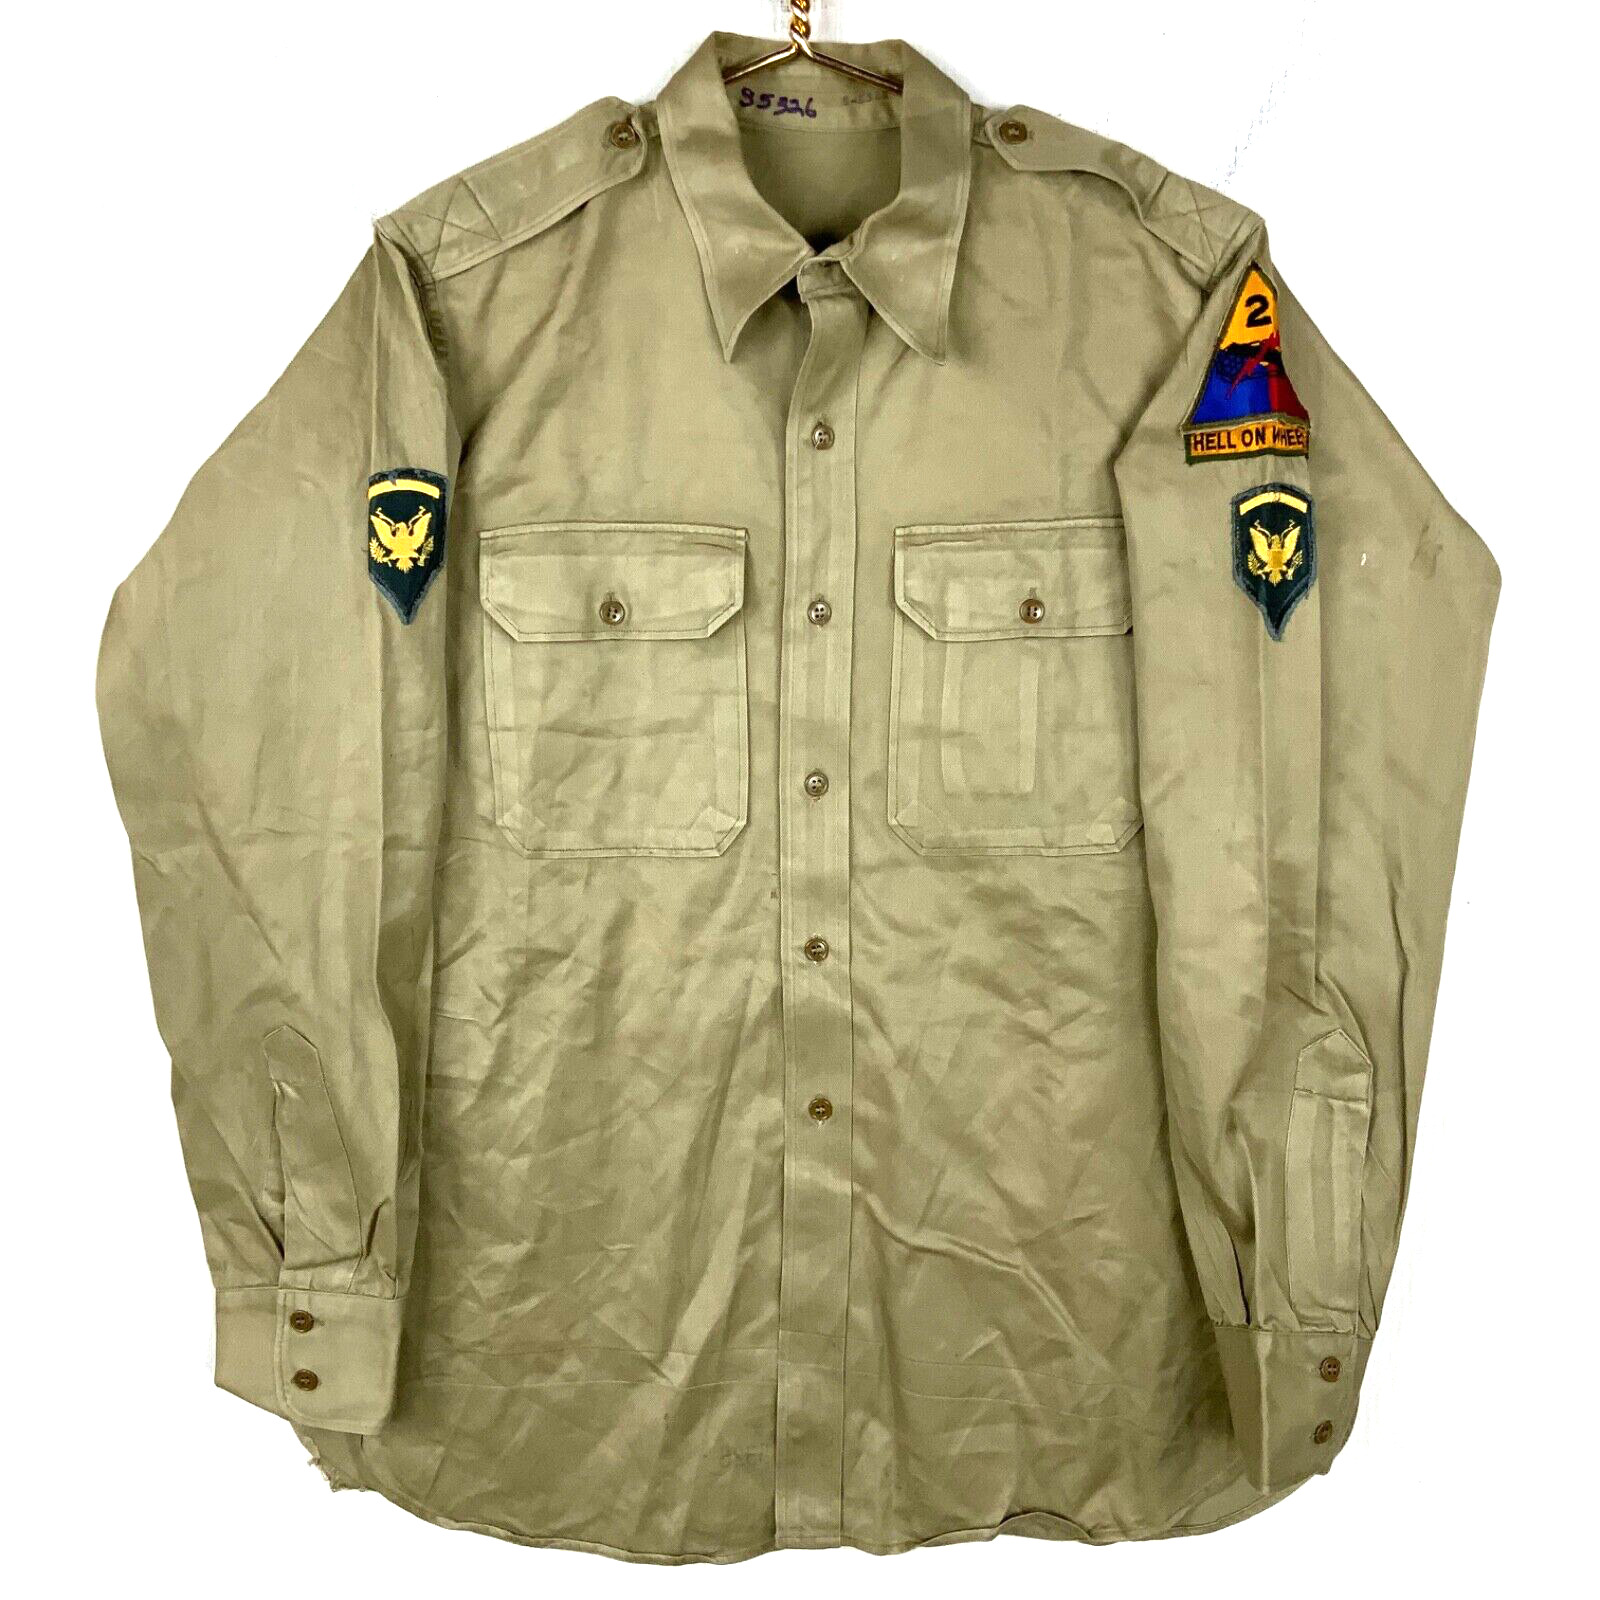 Vintage Us Army Og-107 Button Up Shirt Size XL Beige Vietnam Era 70s